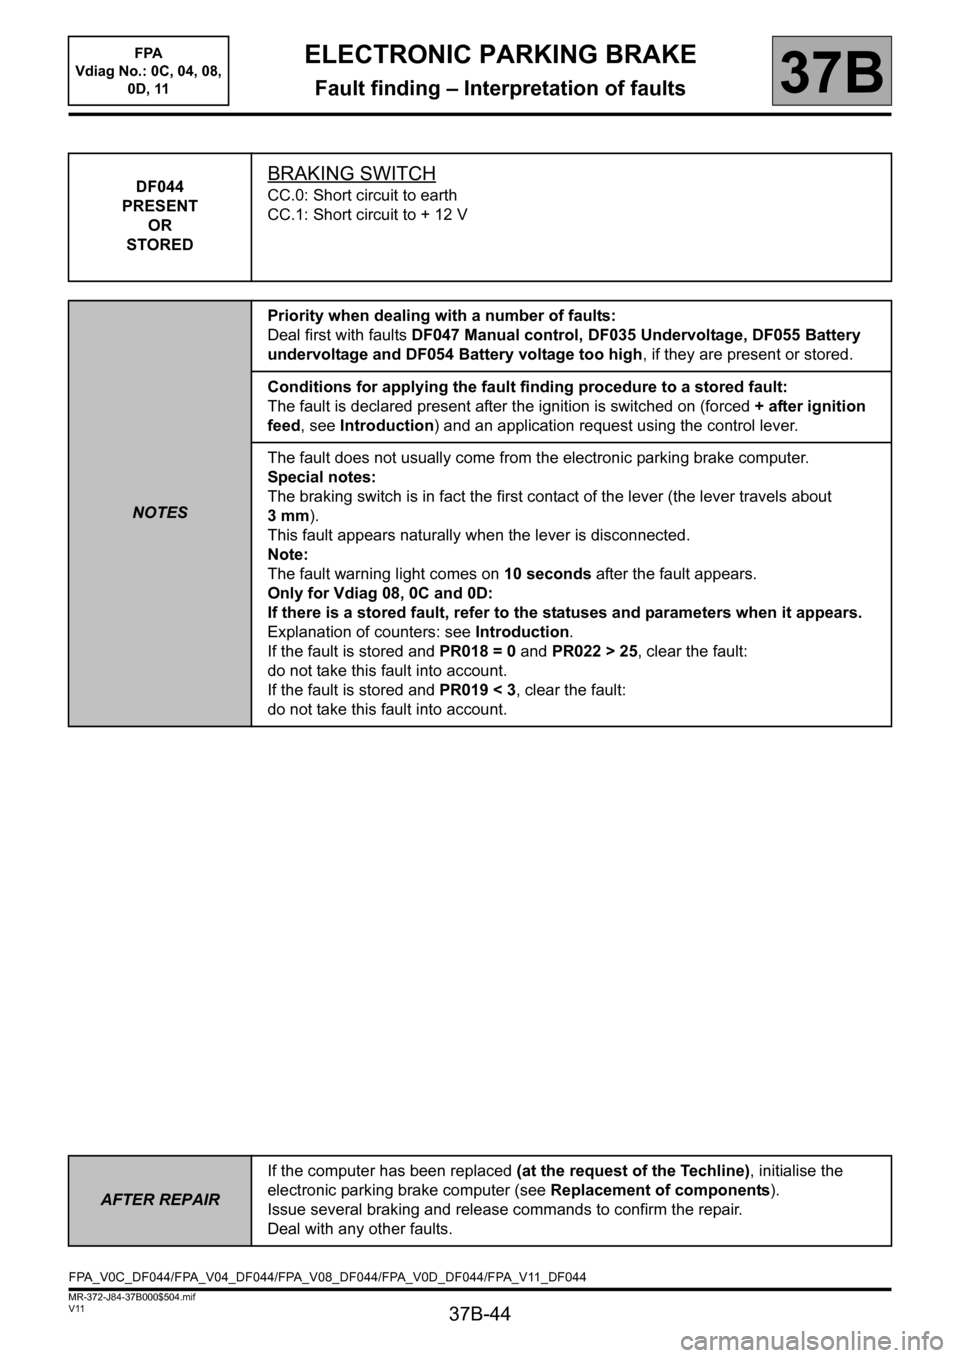 RENAULT SCENIC 2013 J95 / 3.G Electronic Parking Brake Workshop Manual 37B-44
MR-372-J84-37B000$504.mif
V11
ELECTRONIC PARKING BRAKE
Fault finding – Interpretation of faults
FPA  
Vdiag No.: 0C, 04, 08, 
0D, 11
37B
DF044
PRESENT
OR
STOREDBRAKING SWITCH
CC.0: Short circ